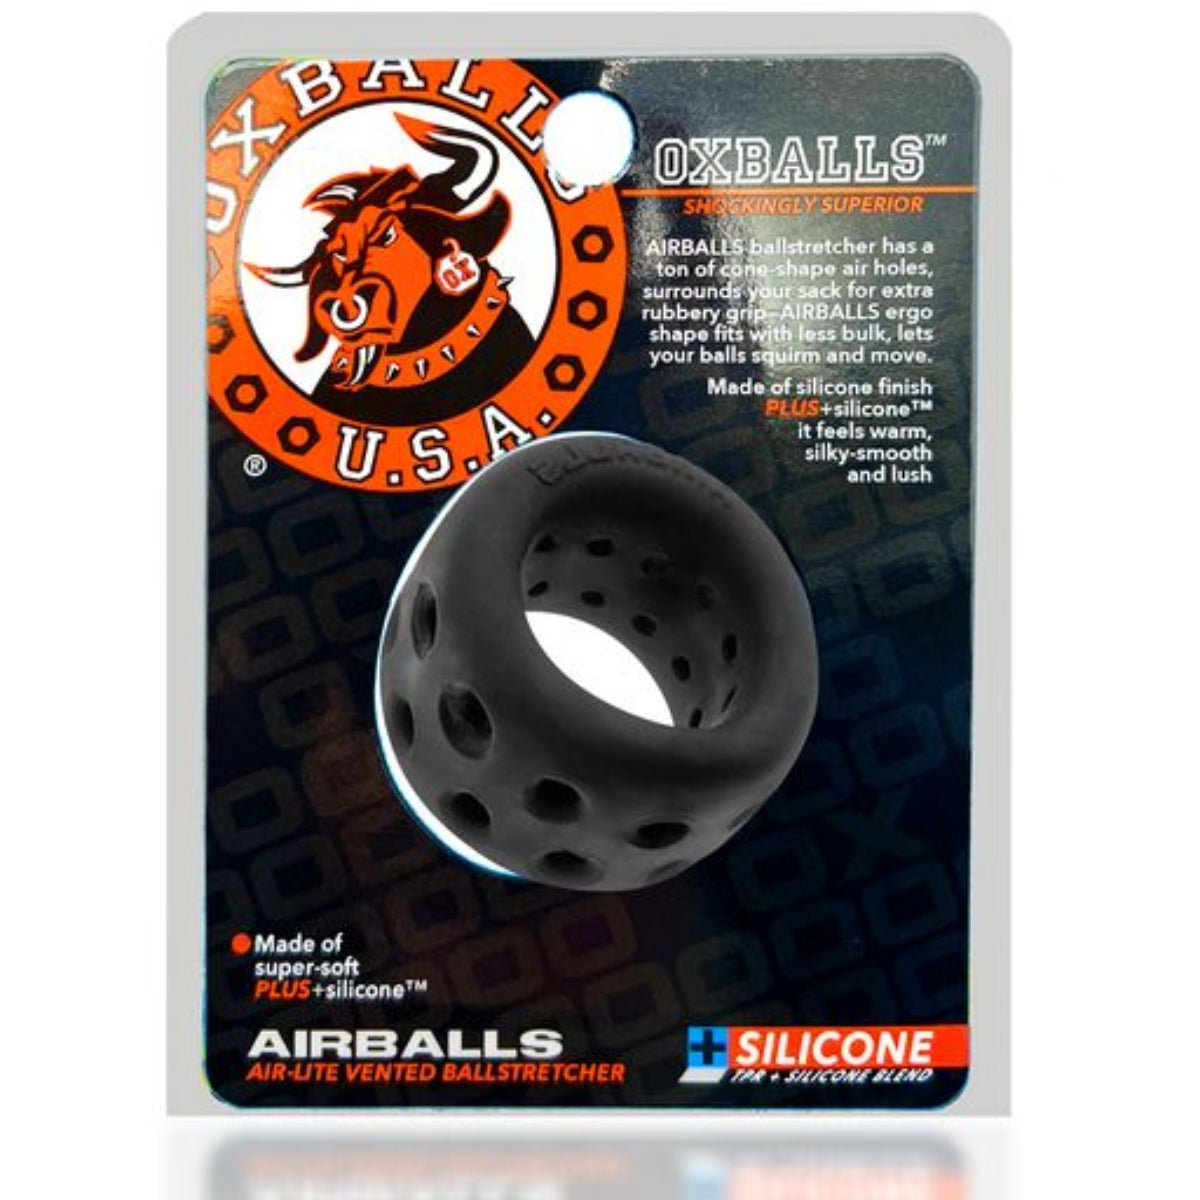 Oxballs Airballs Air-lite Ball Stretcher Black Ice (8132617011439)